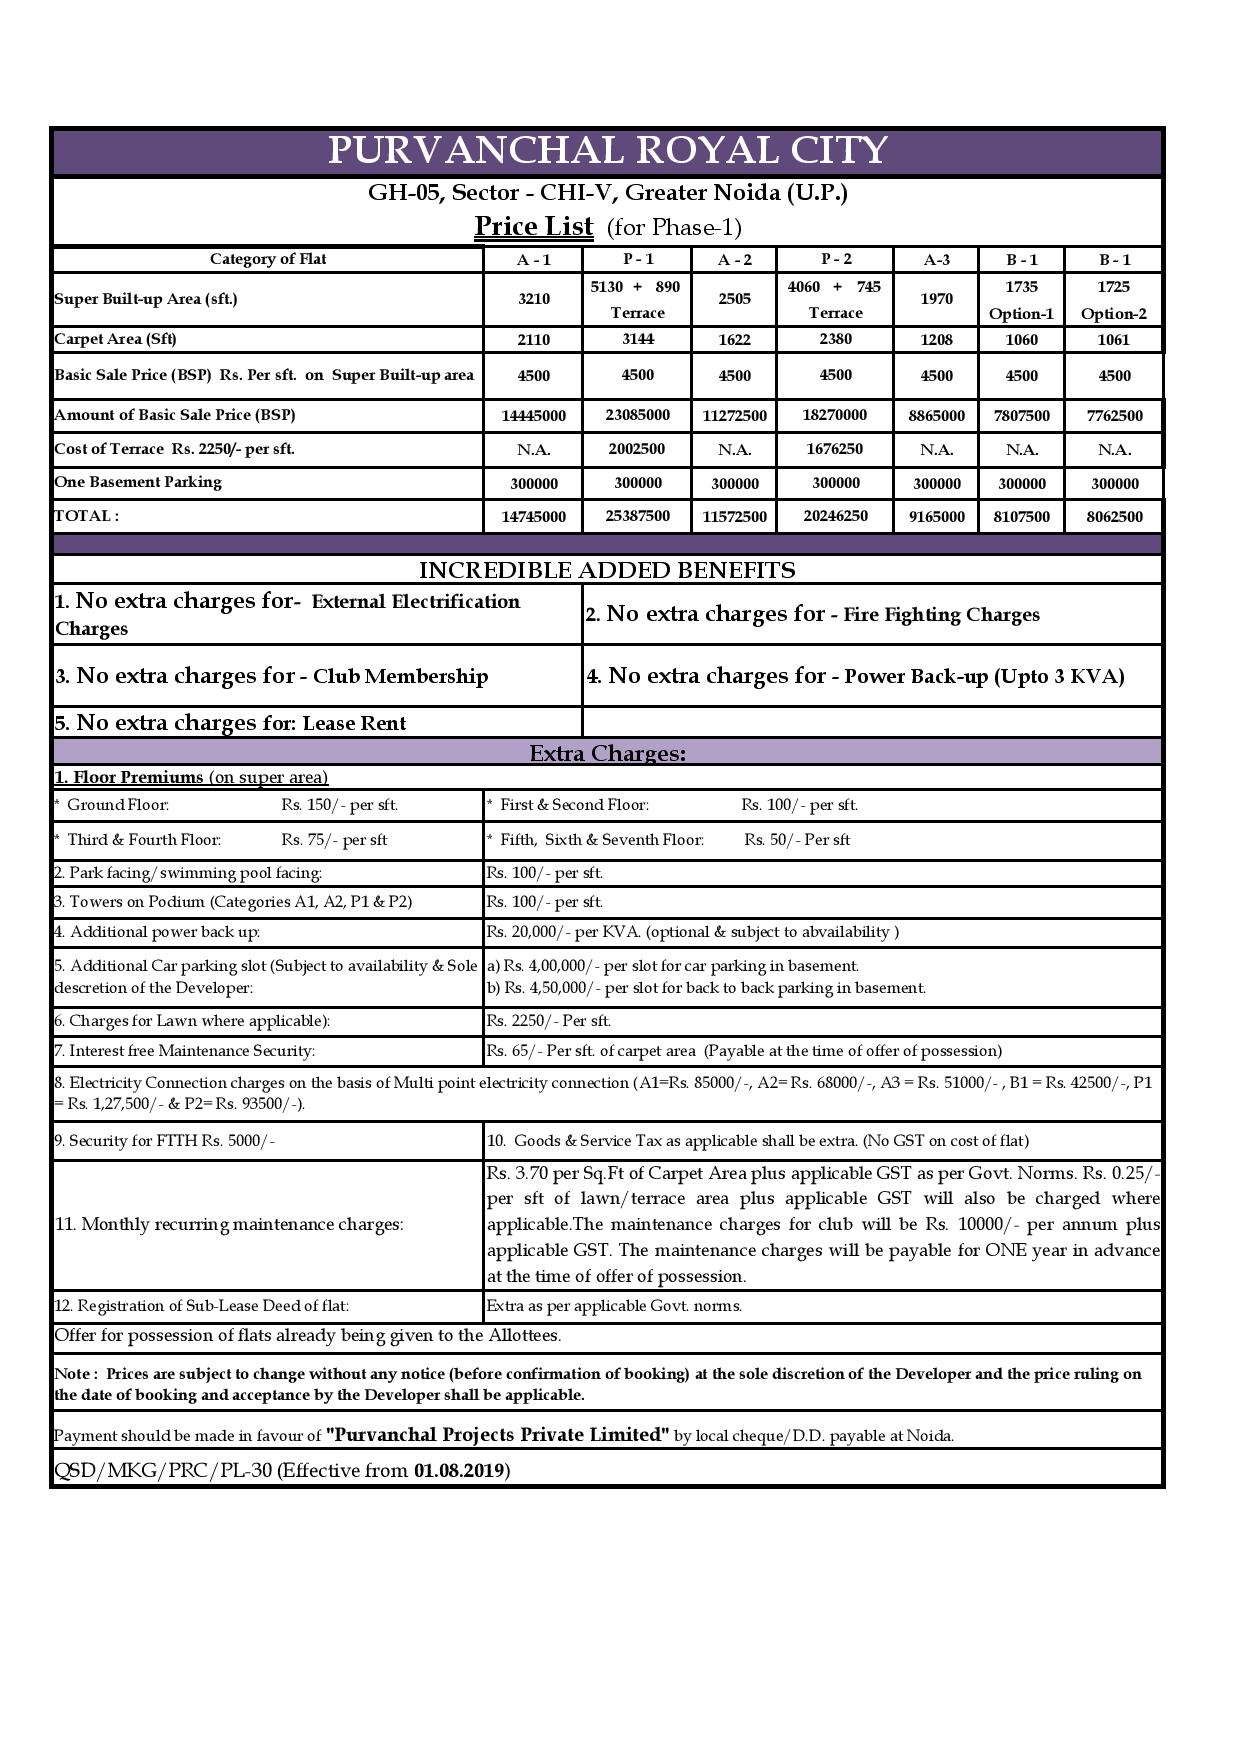 Purvanchal Royal City Price List